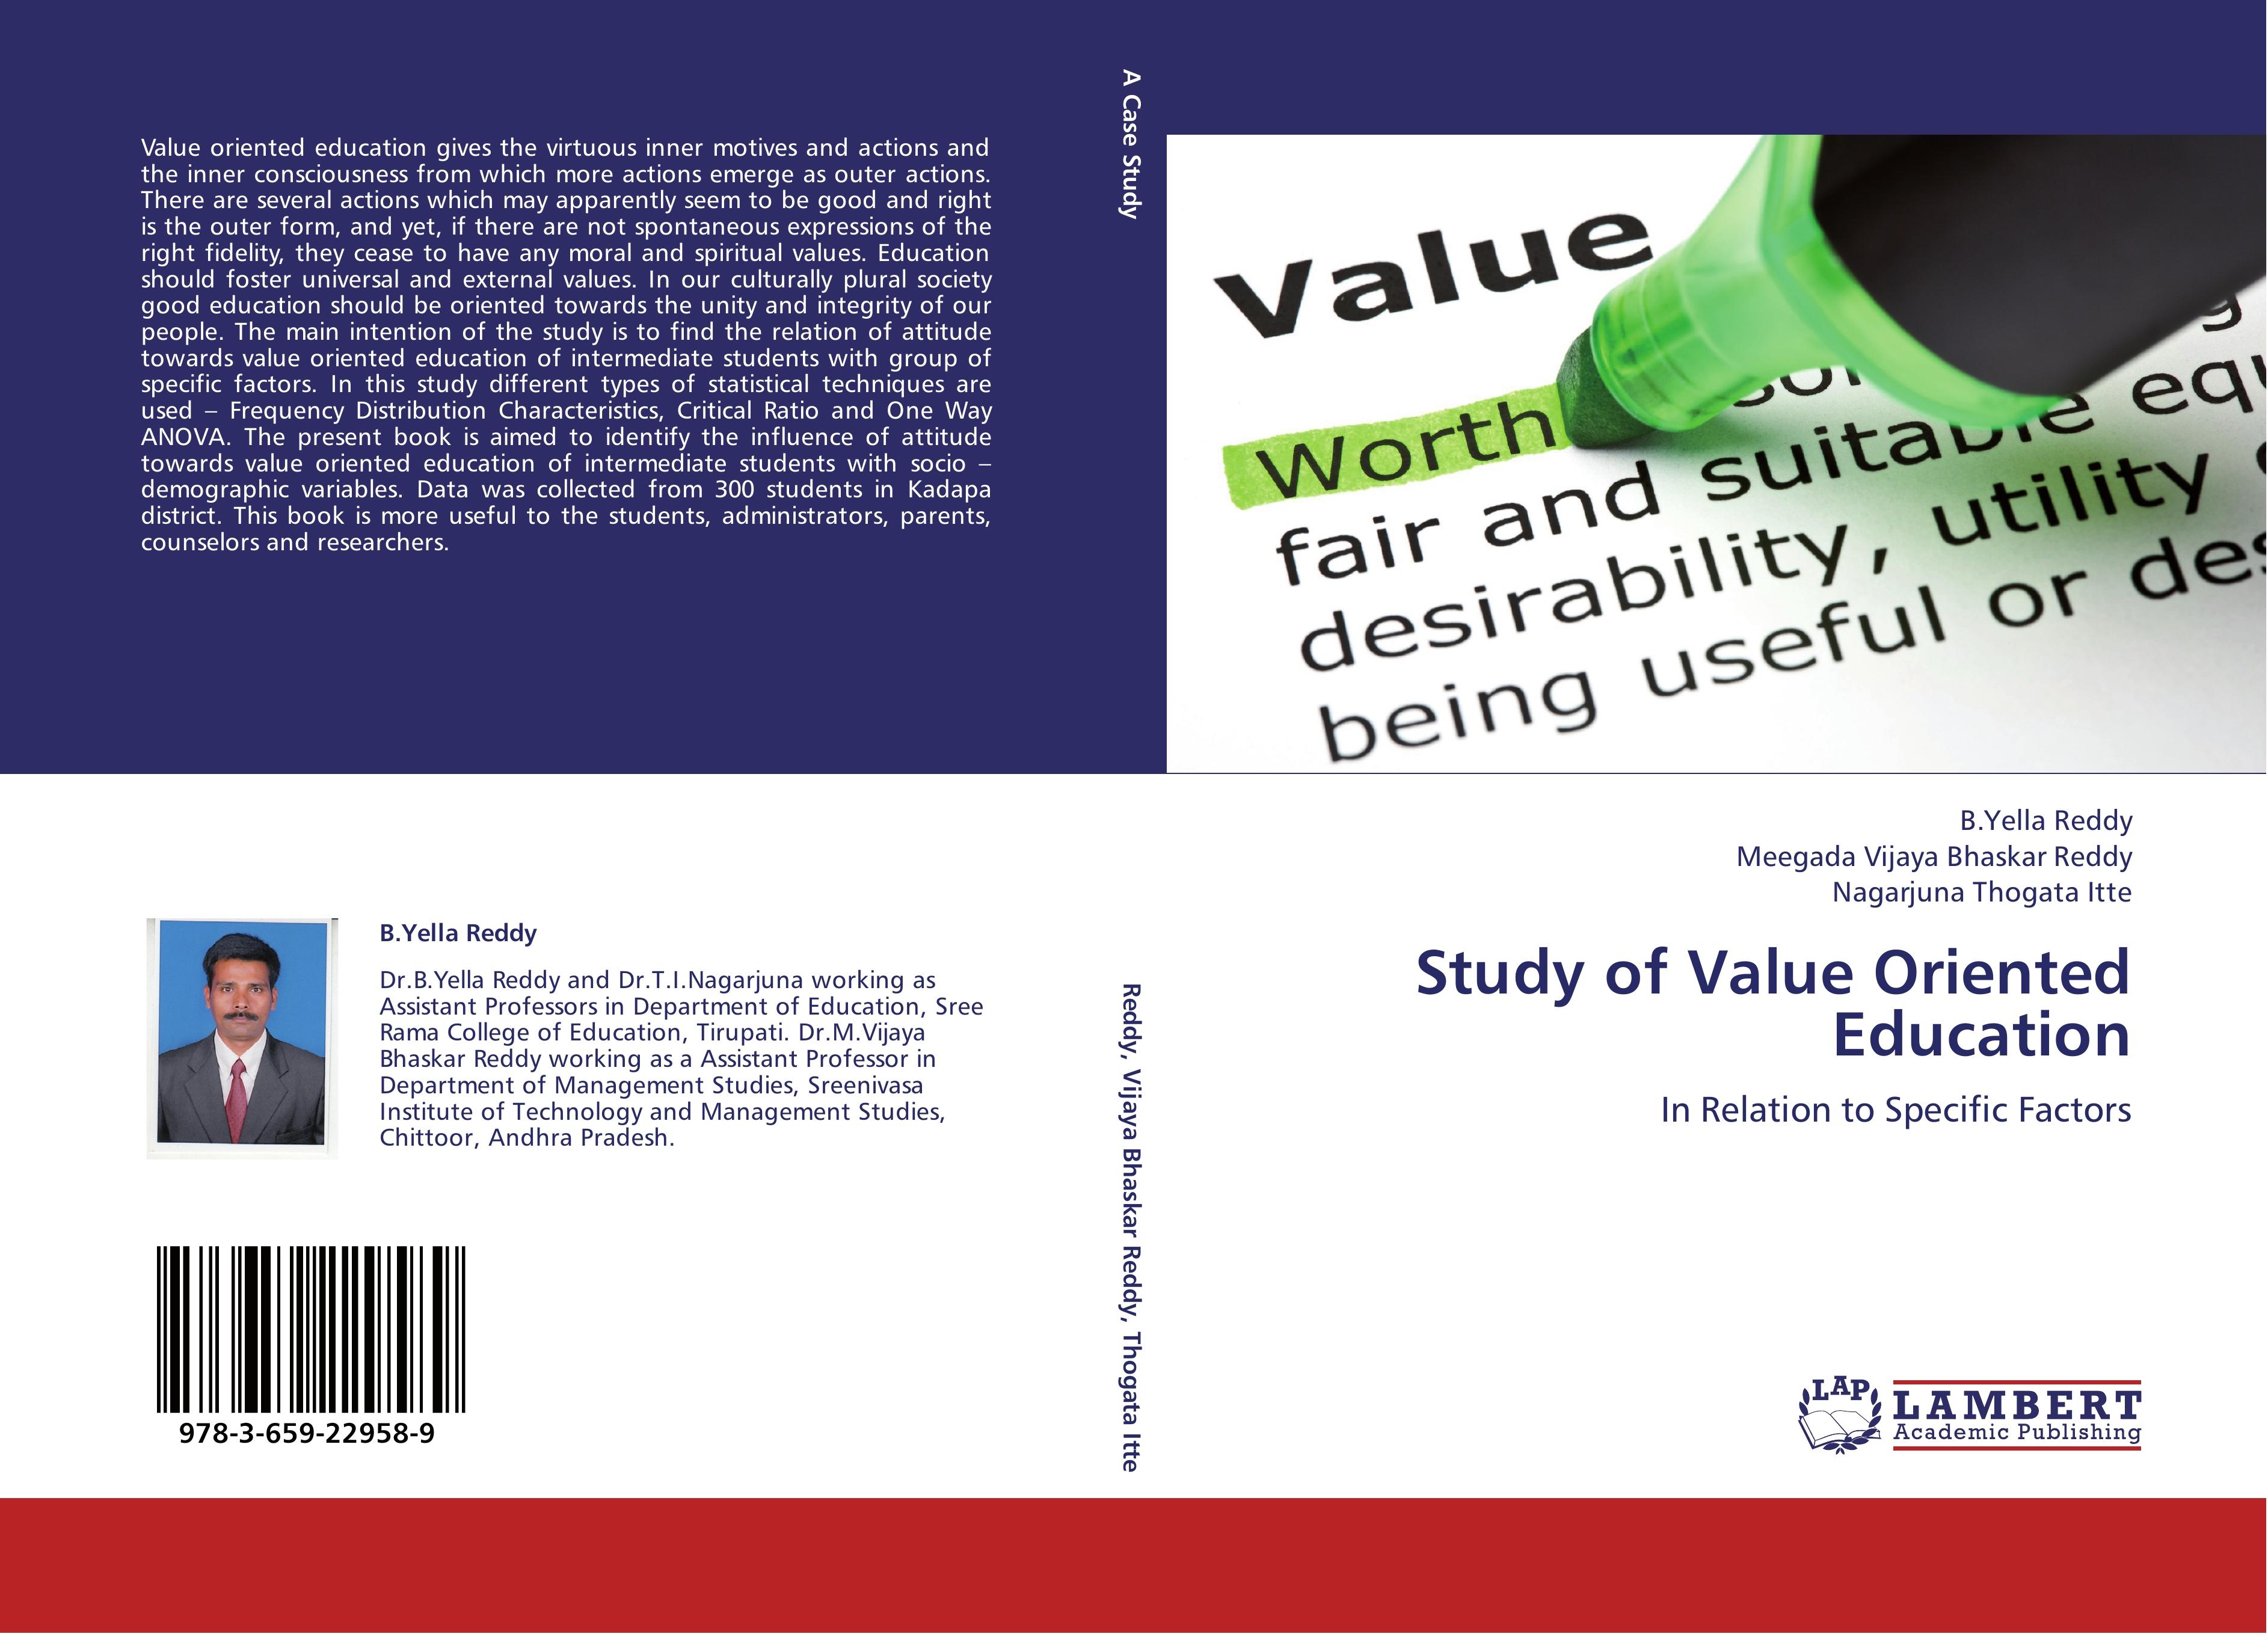 Study of Value Oriented Education - B.Yella Reddy Meegada Vijaya Bhaskar Reddy Nagarjuna Thogata Itte